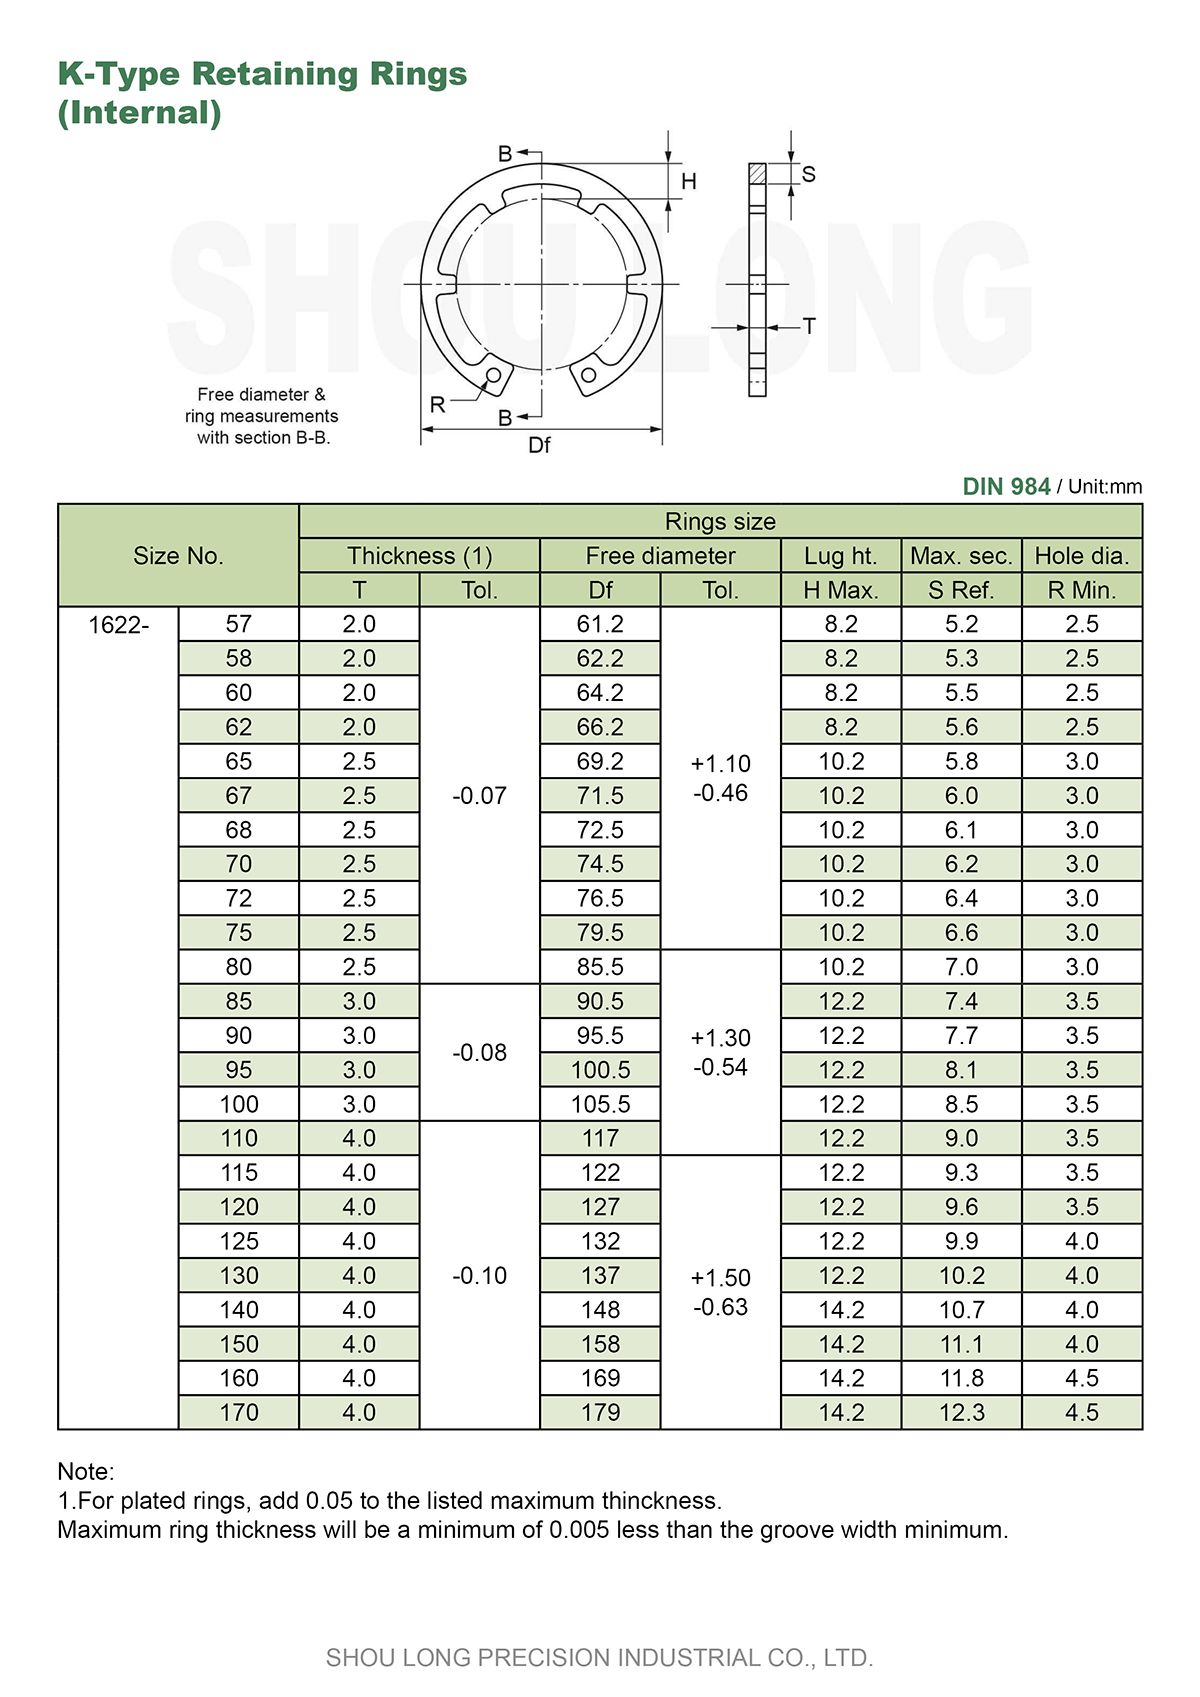 Especificación de Anillos de Retención Tipo K Métricos para Agujeros DIN984-2